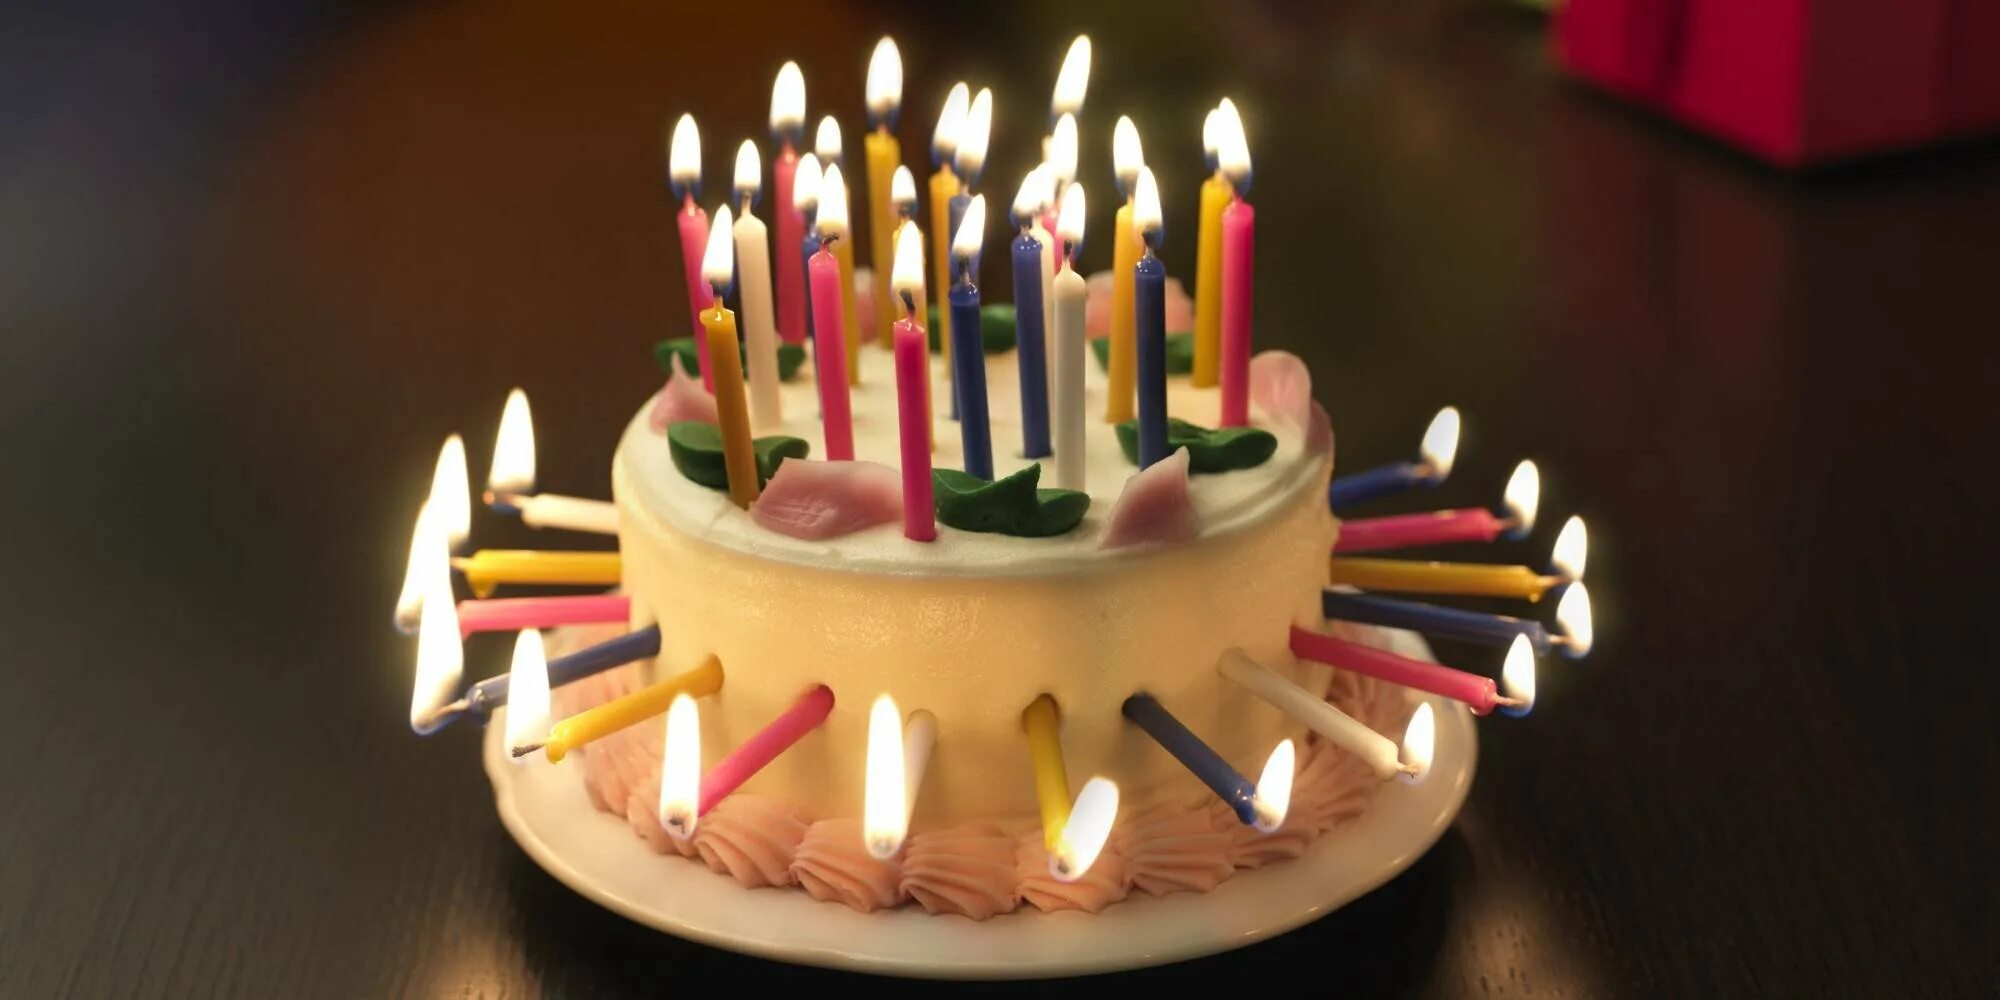 Сколько свечей на торте